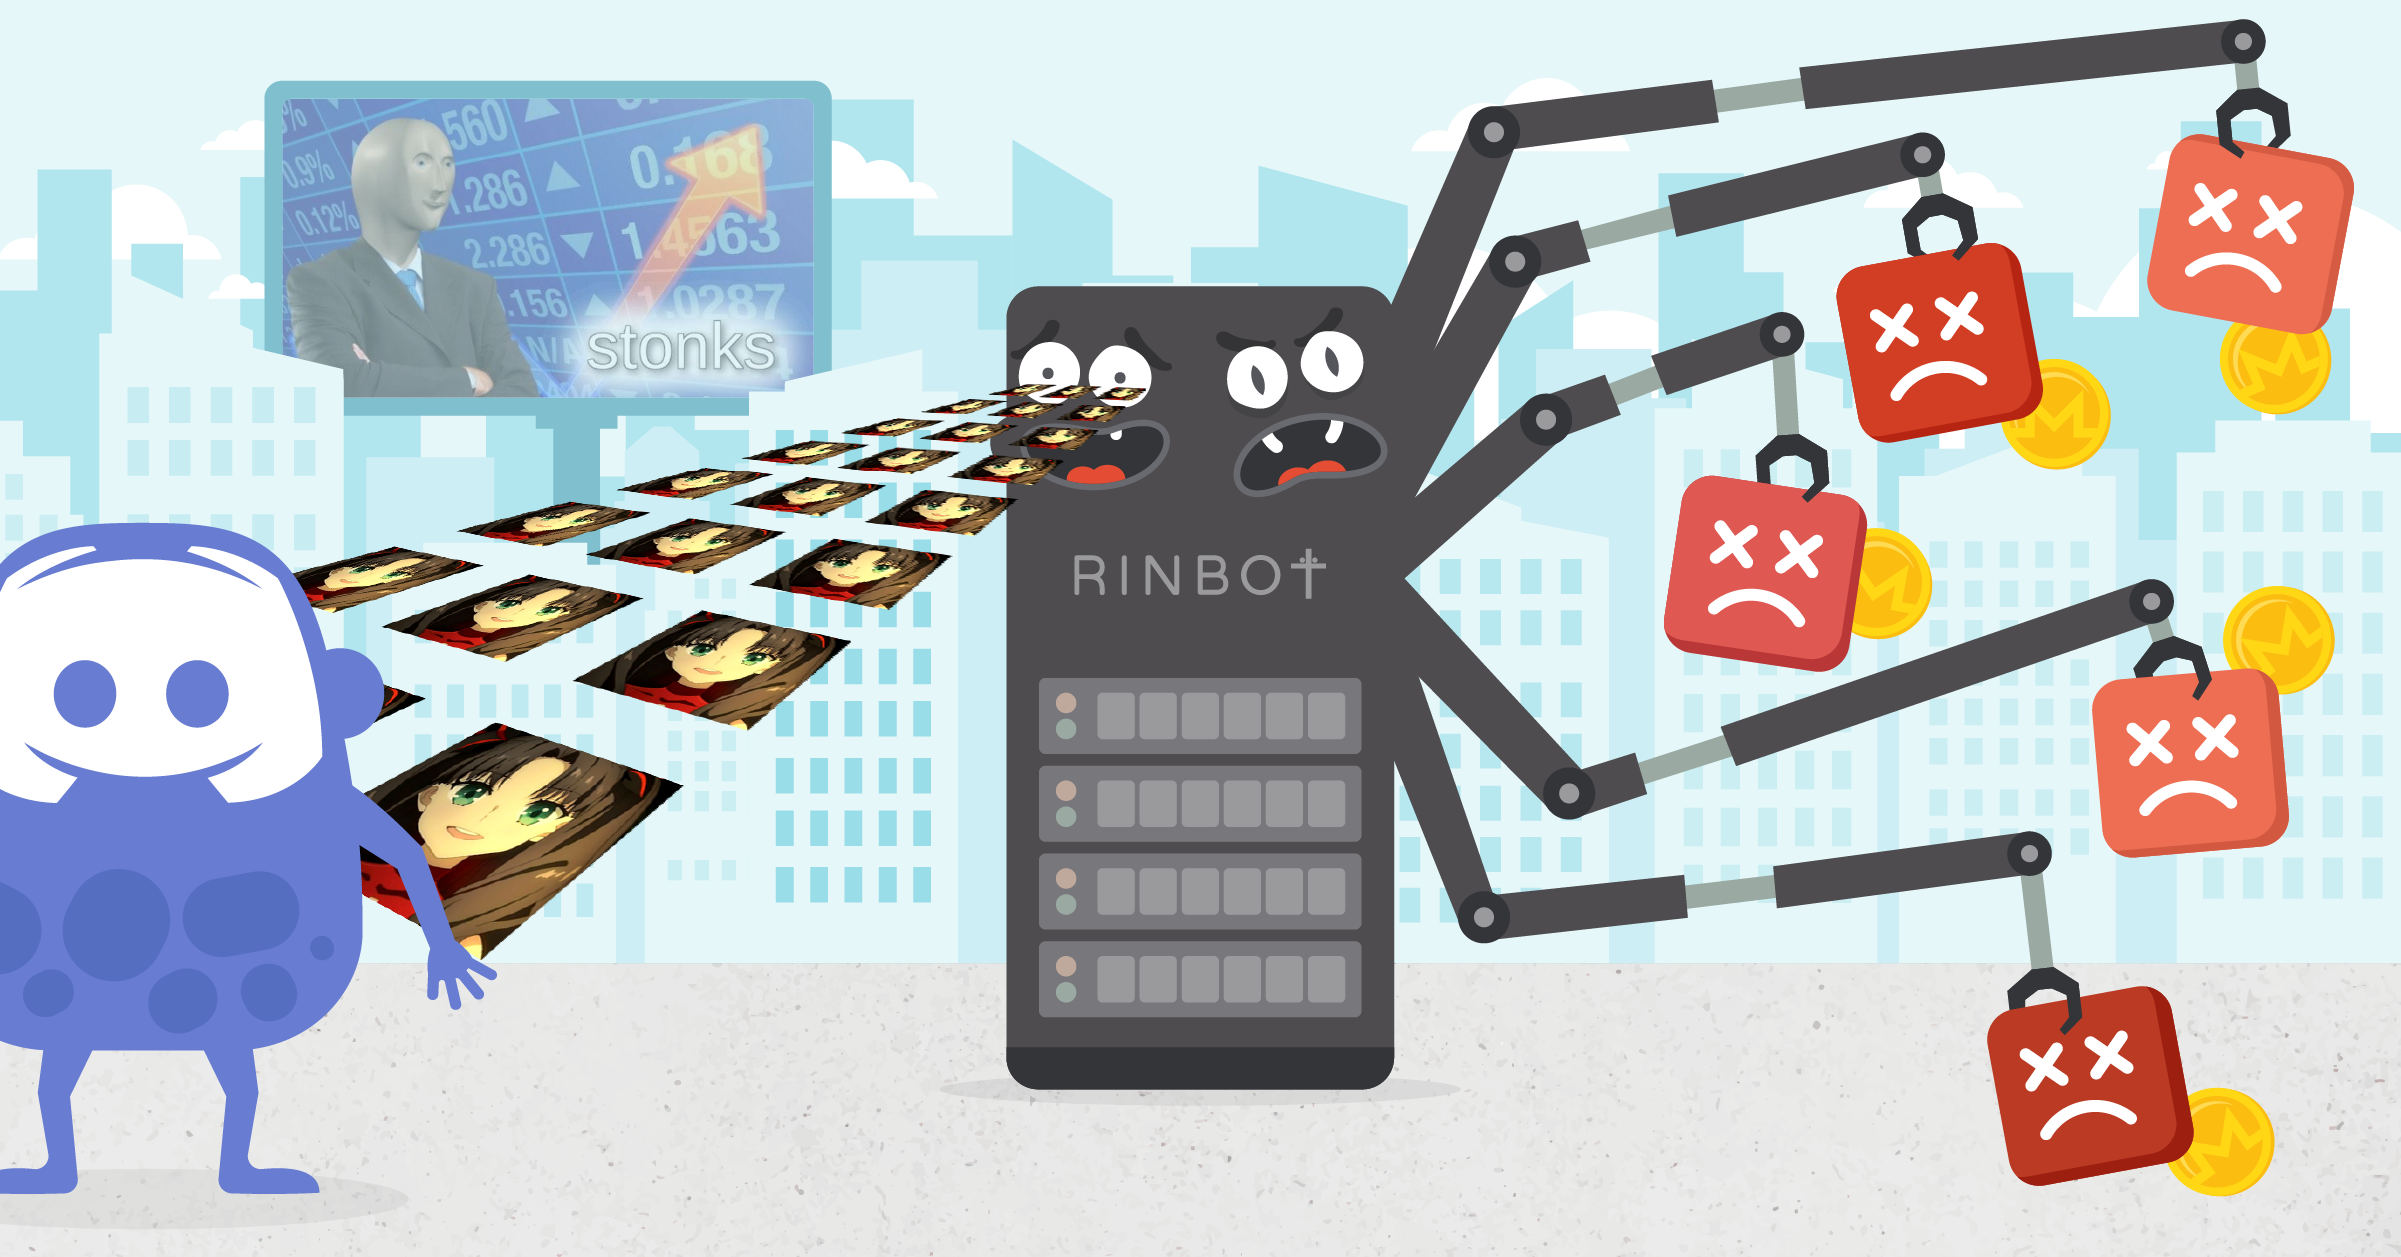 THREAT ALERT: Crypto miner attack involving RinBot’s server, a popular Discord bot thumbnail image